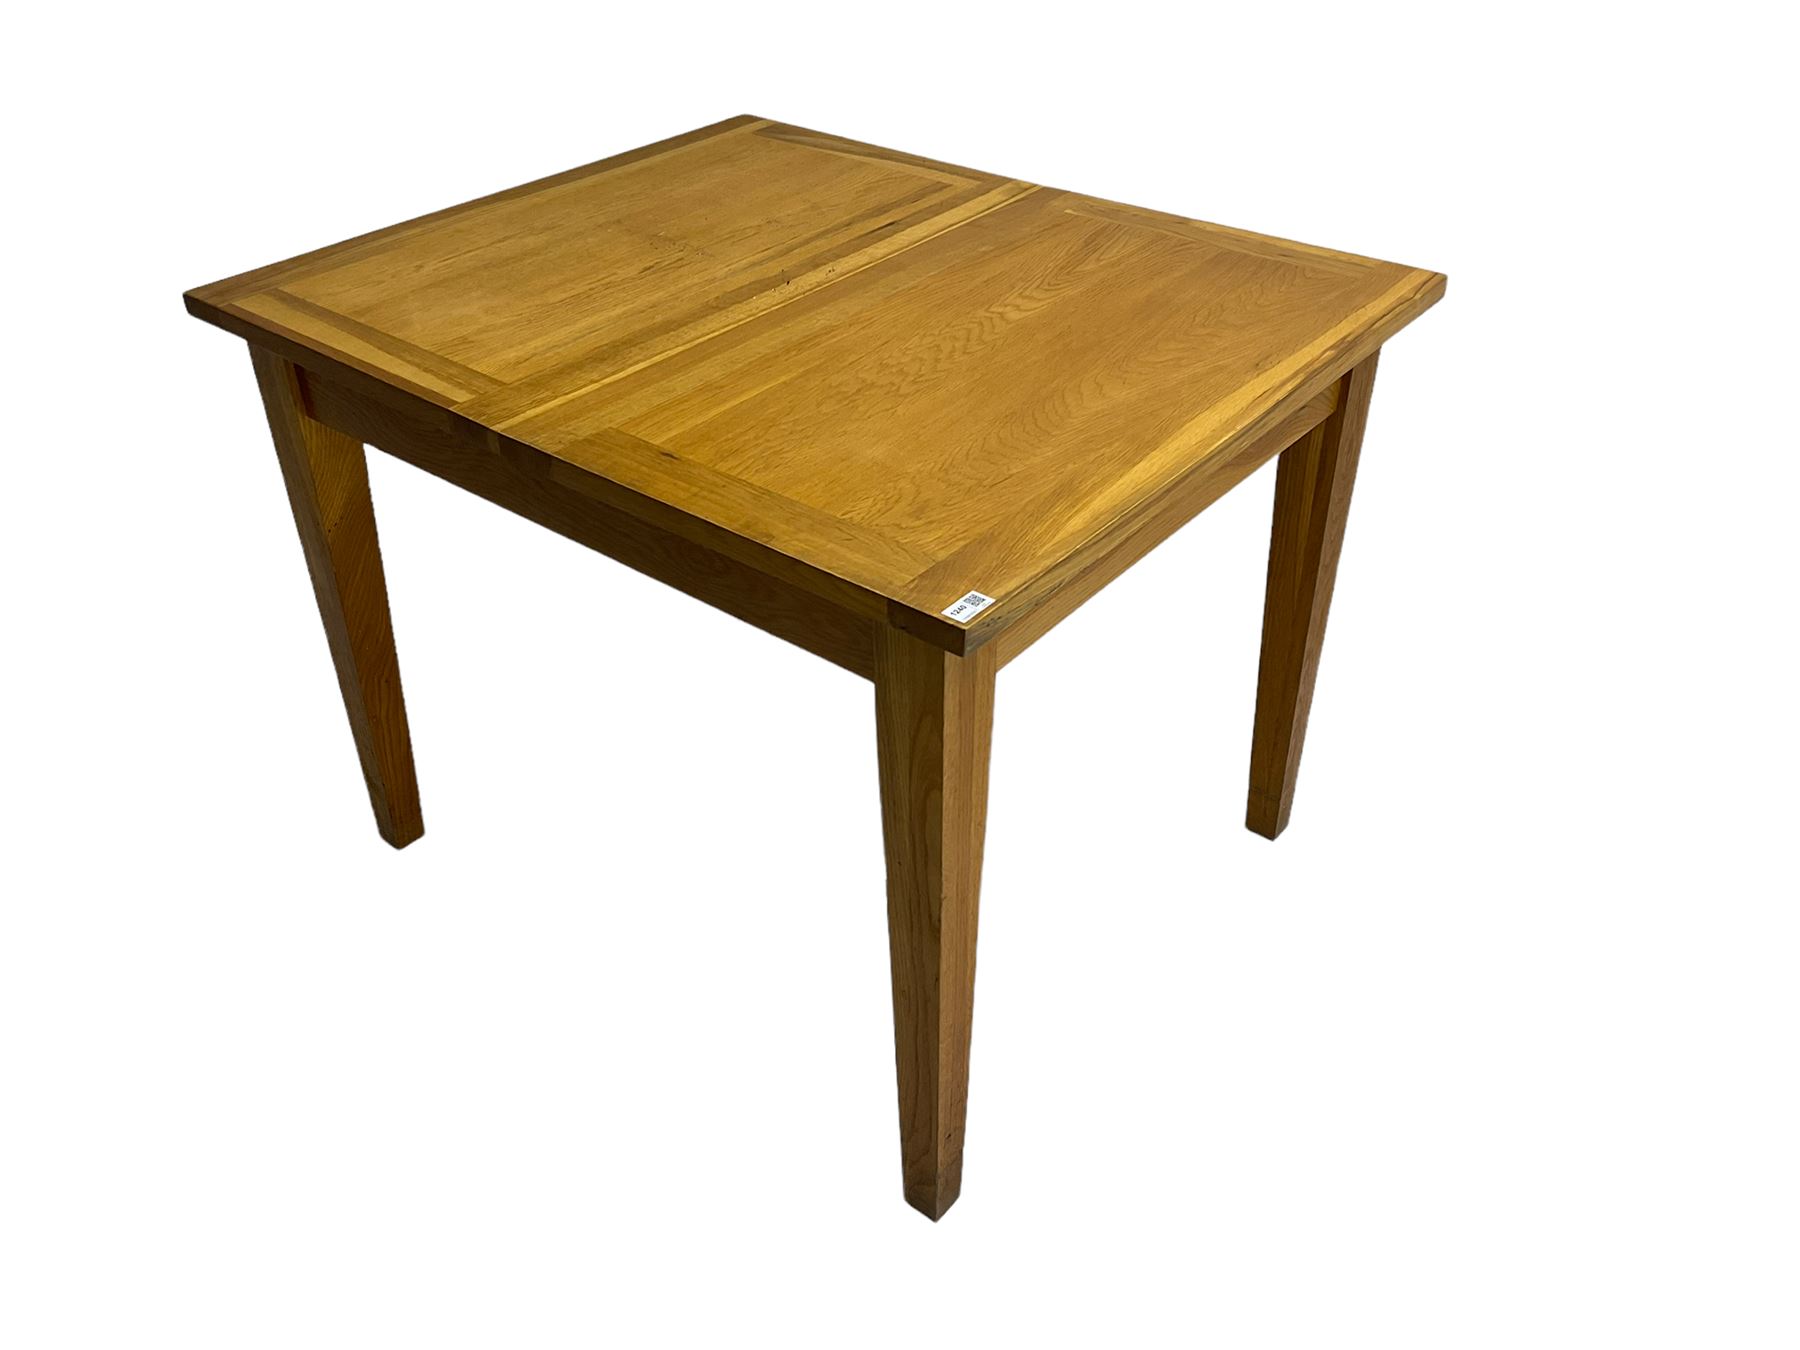 Light oak extending dining table - Image 7 of 7